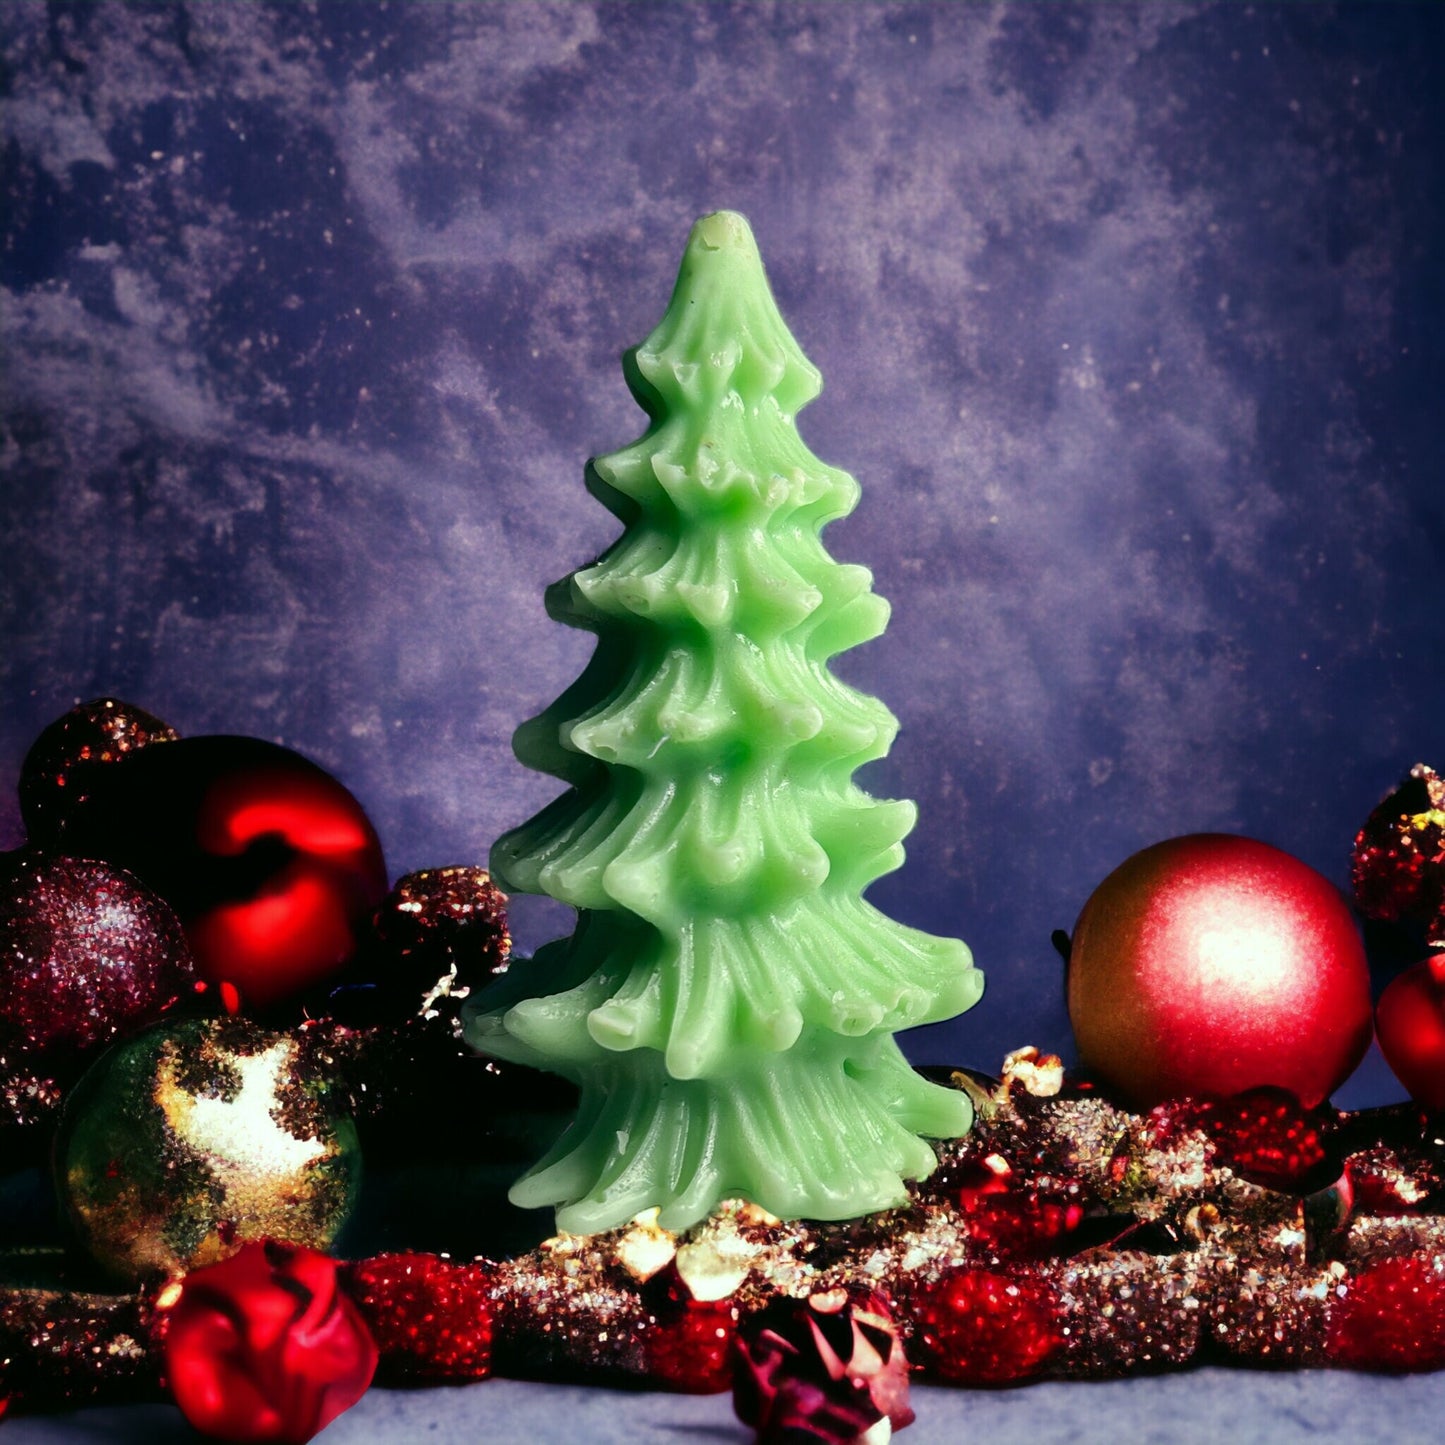 Festive Holiday Christmas Trees